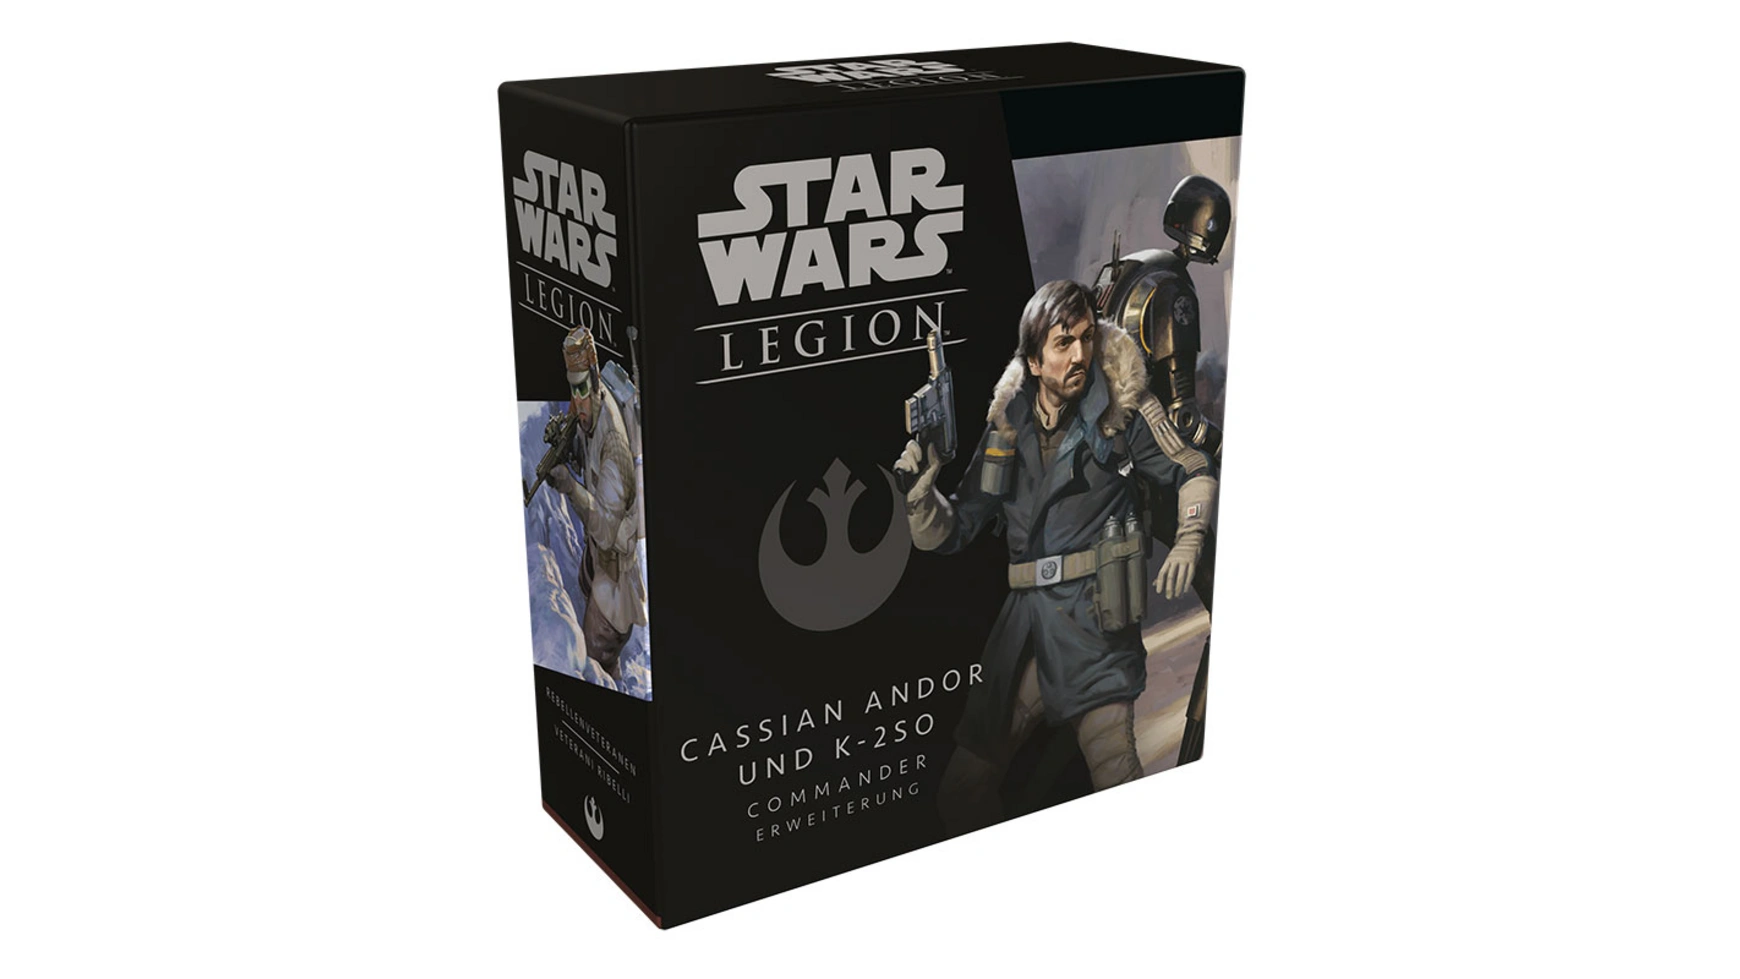 Fantasy Flight Games Star Wars: Legion Кассиан Андор Expansion DE цена и фото